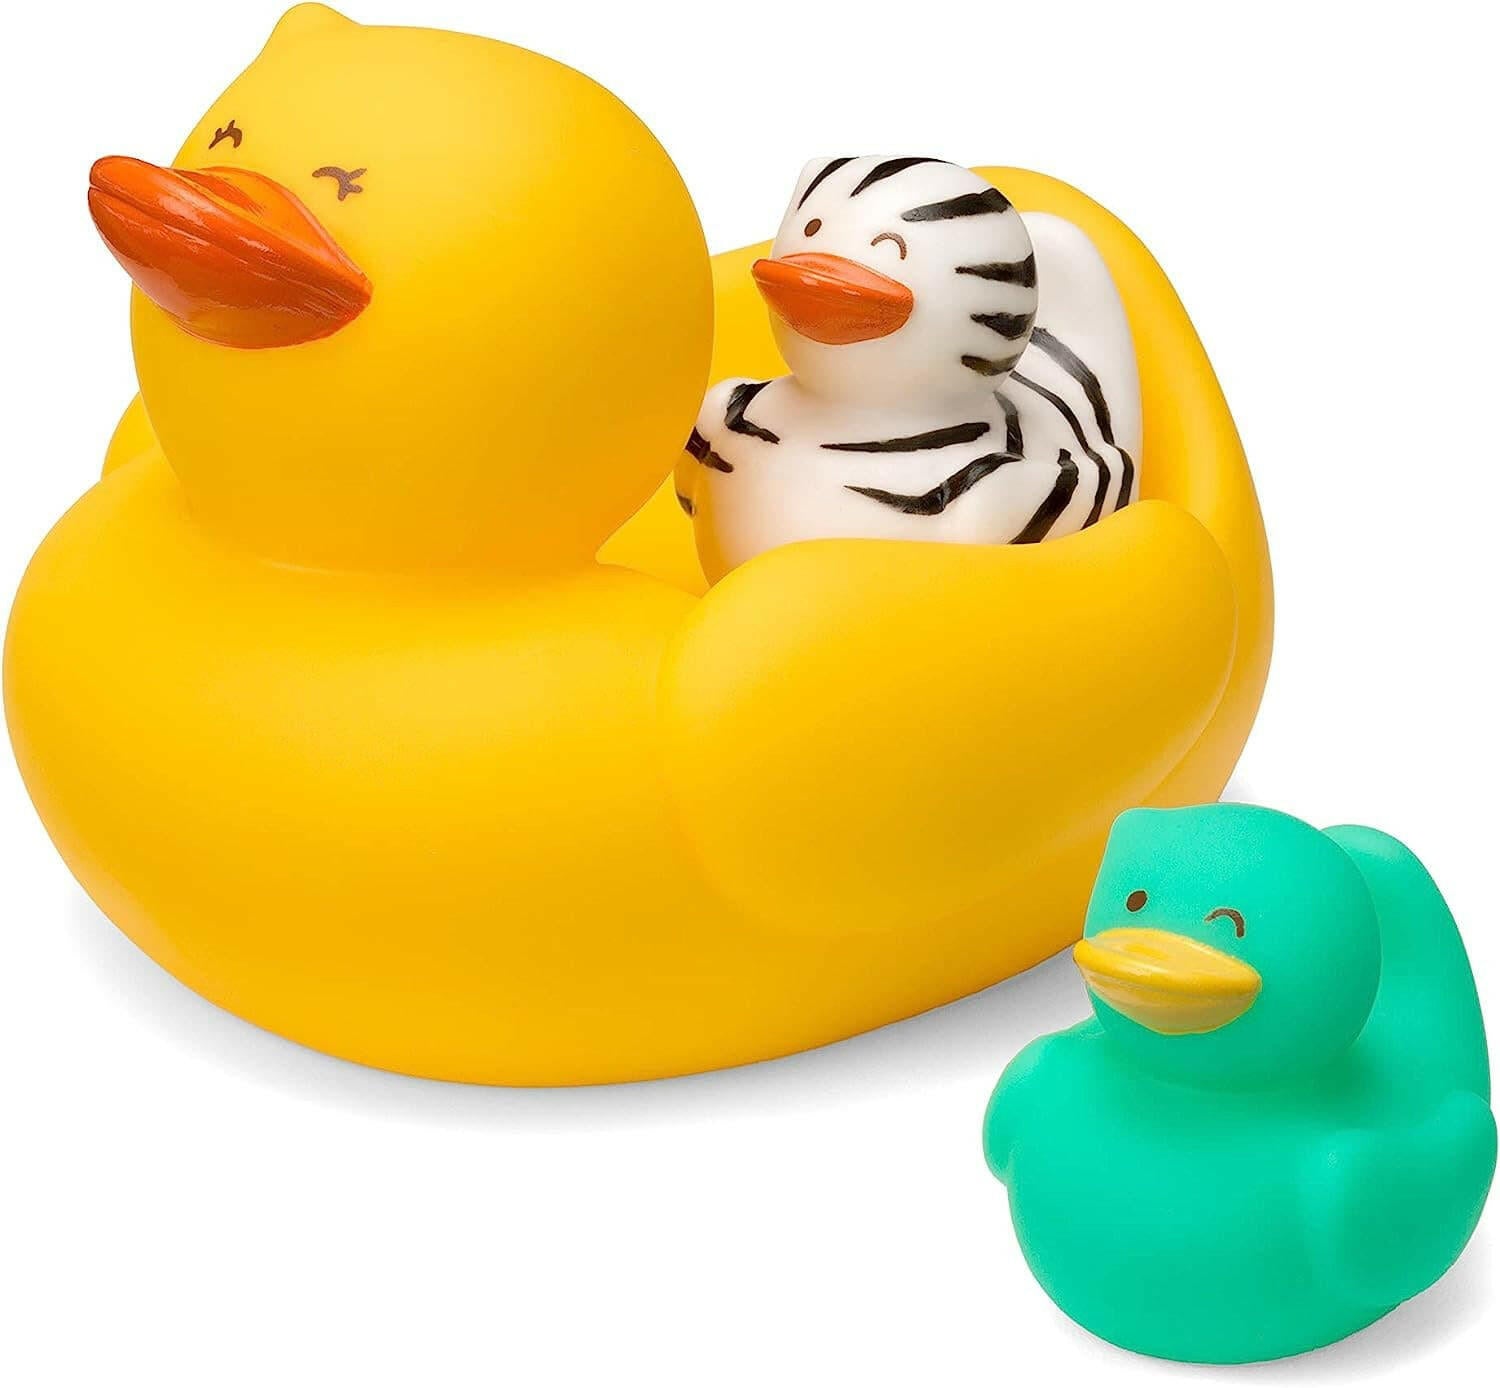 Infantino Bath Duck N Family Baby Bathing Toys.